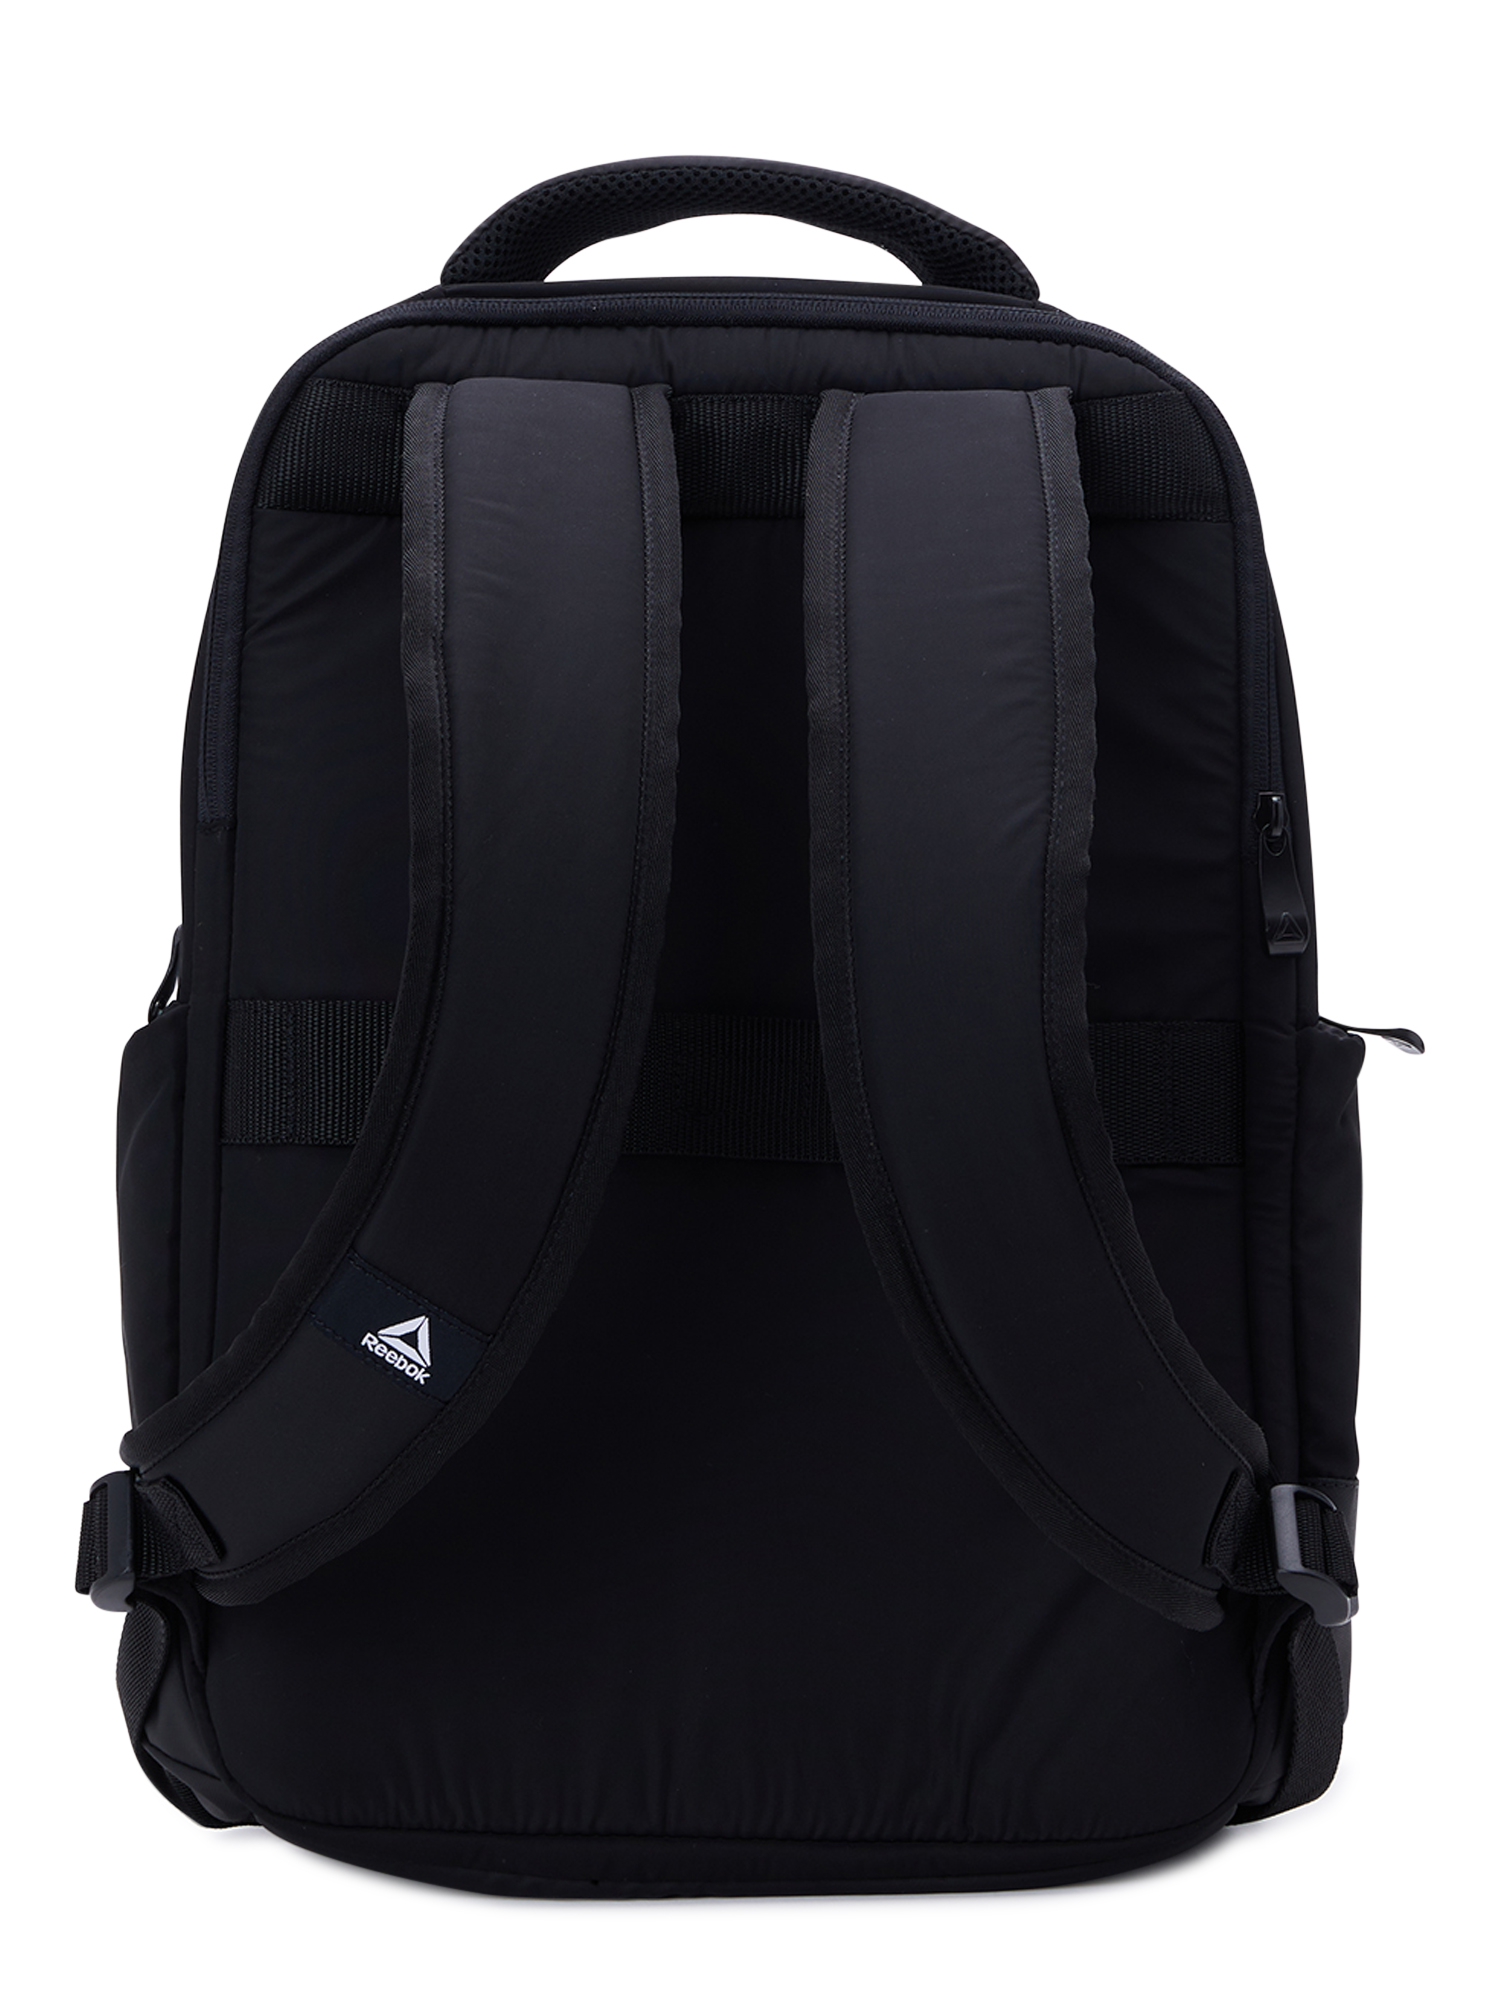 Reebok Unisex Adult Winter 16" Laptop Backpack, Black - image 4 of 6